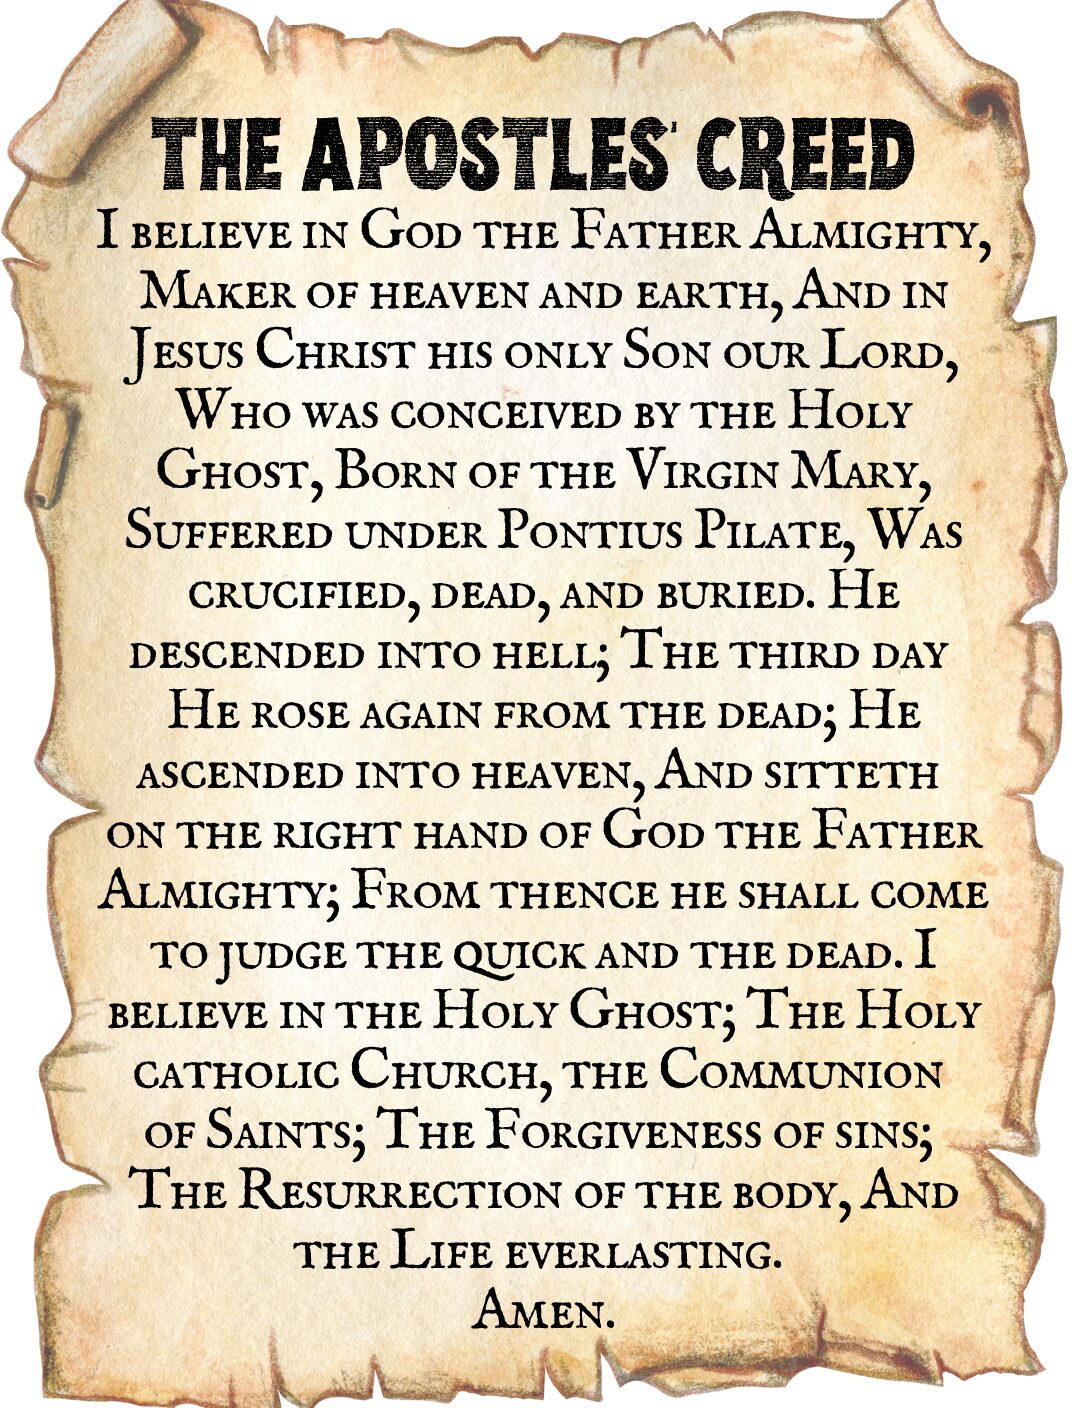 THE-APOSTLES-CREED-pdf.jpg